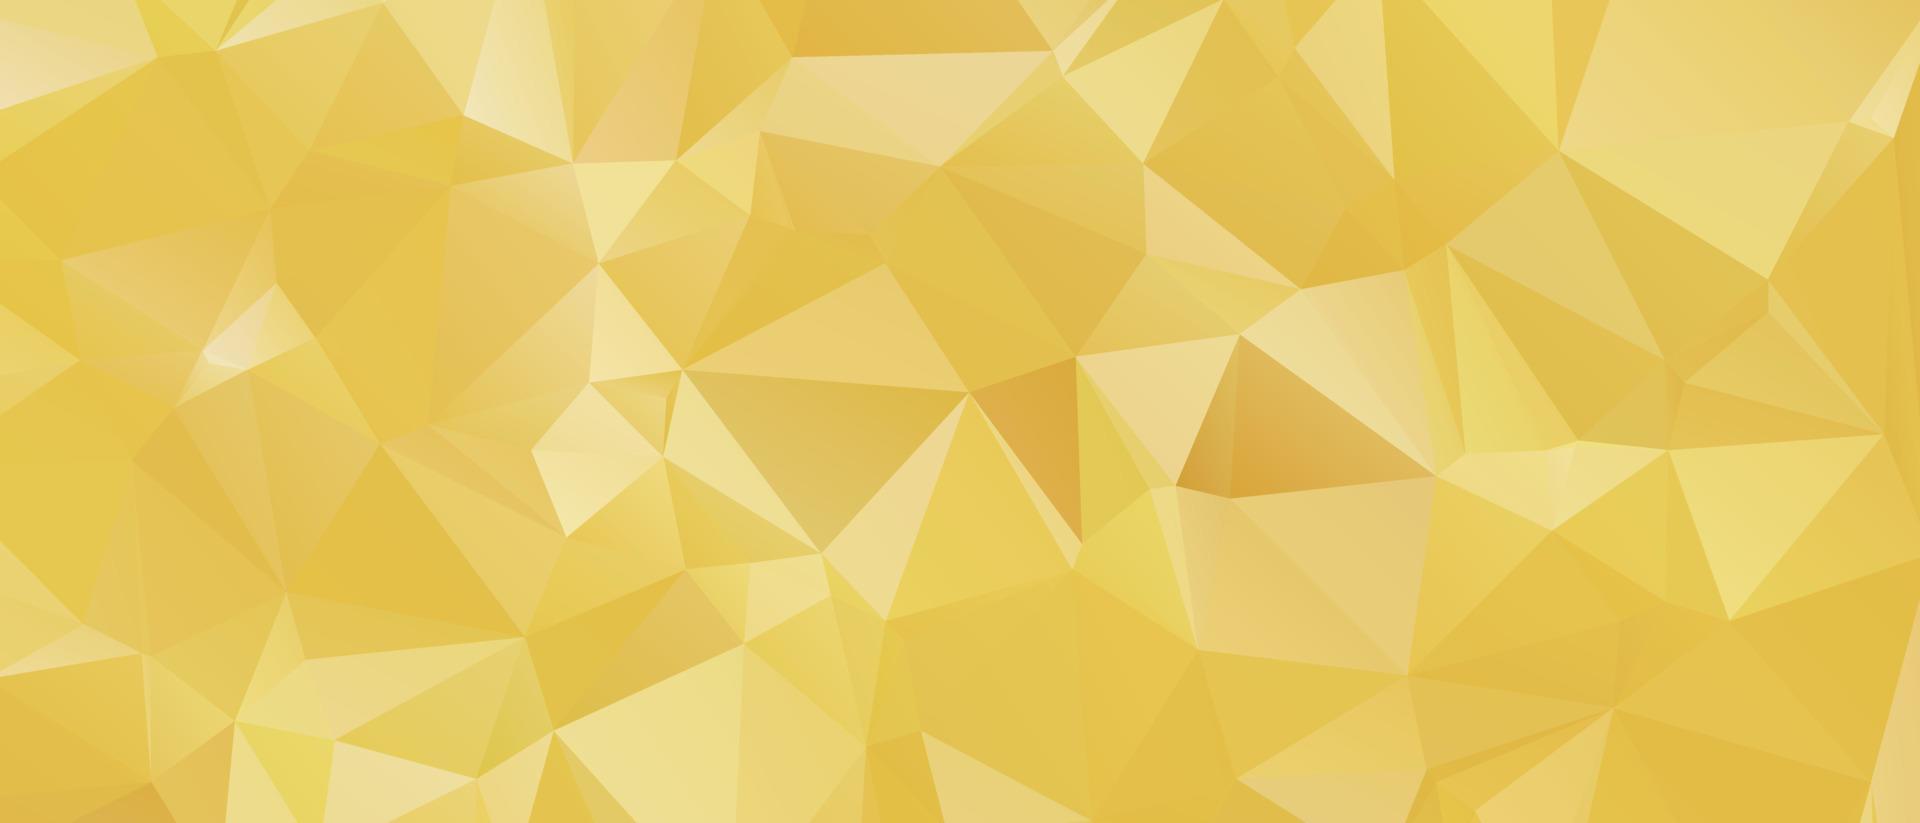 abstrato cor polígono fundo projeto, abstrato geométrico origami estilo com gradiente vetor